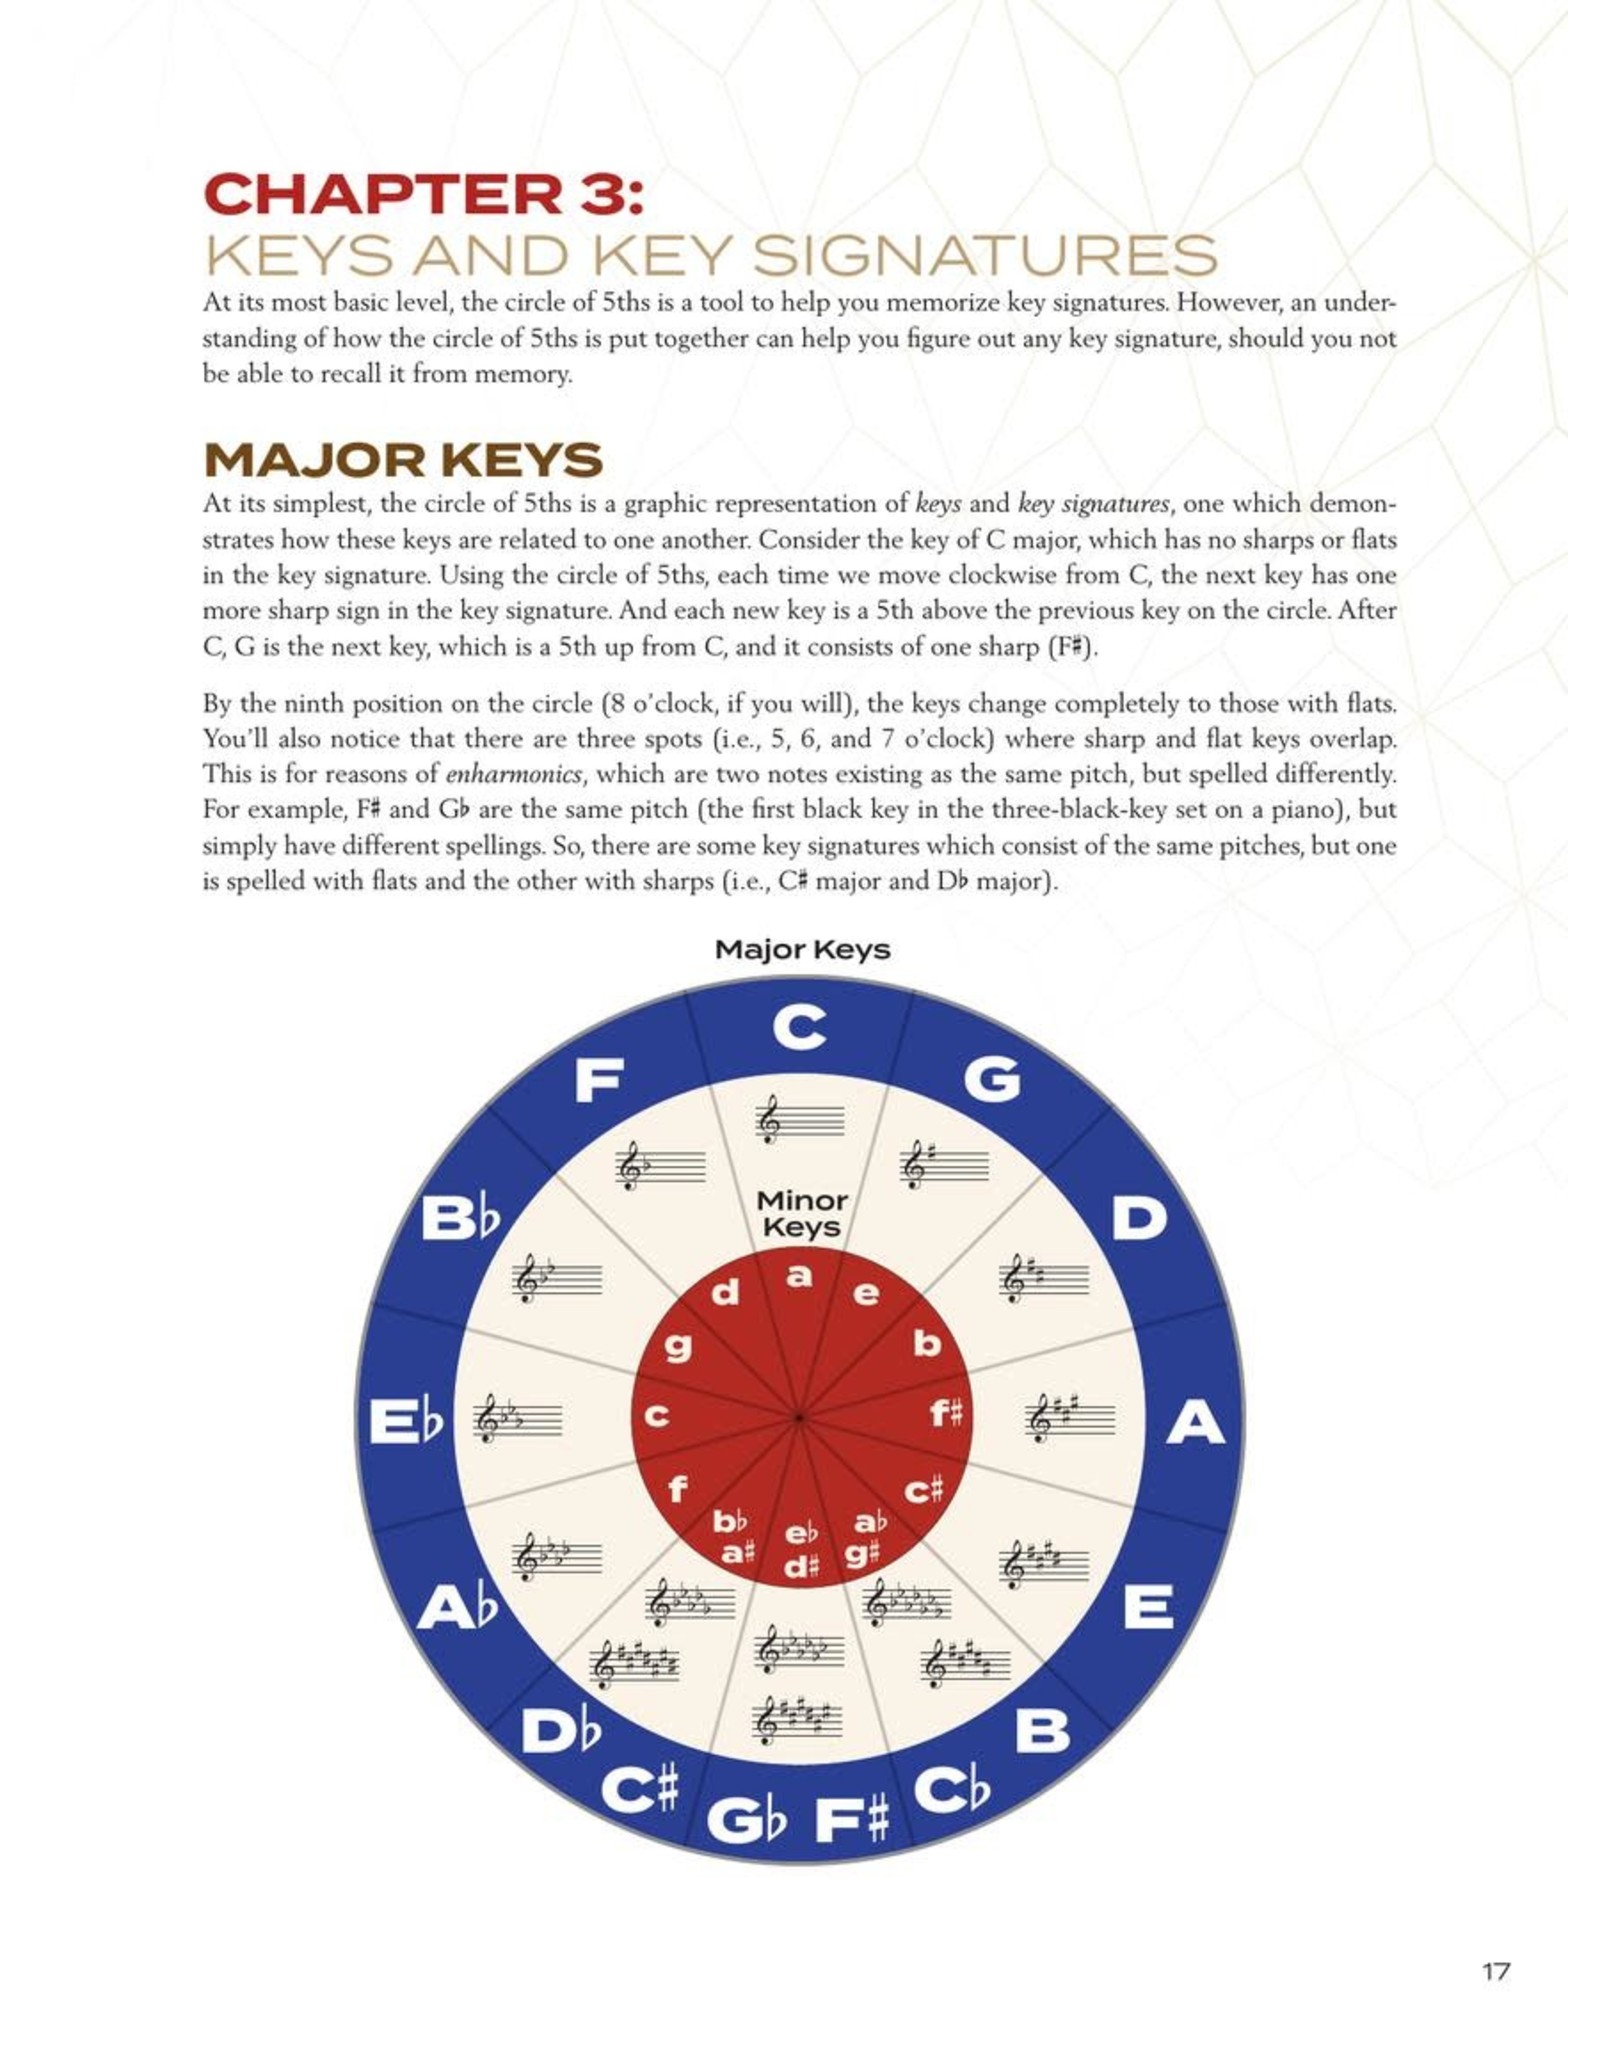 Hal Leonard Circle of Fifths Explained - Understanding the Basics of Harmonic Organization